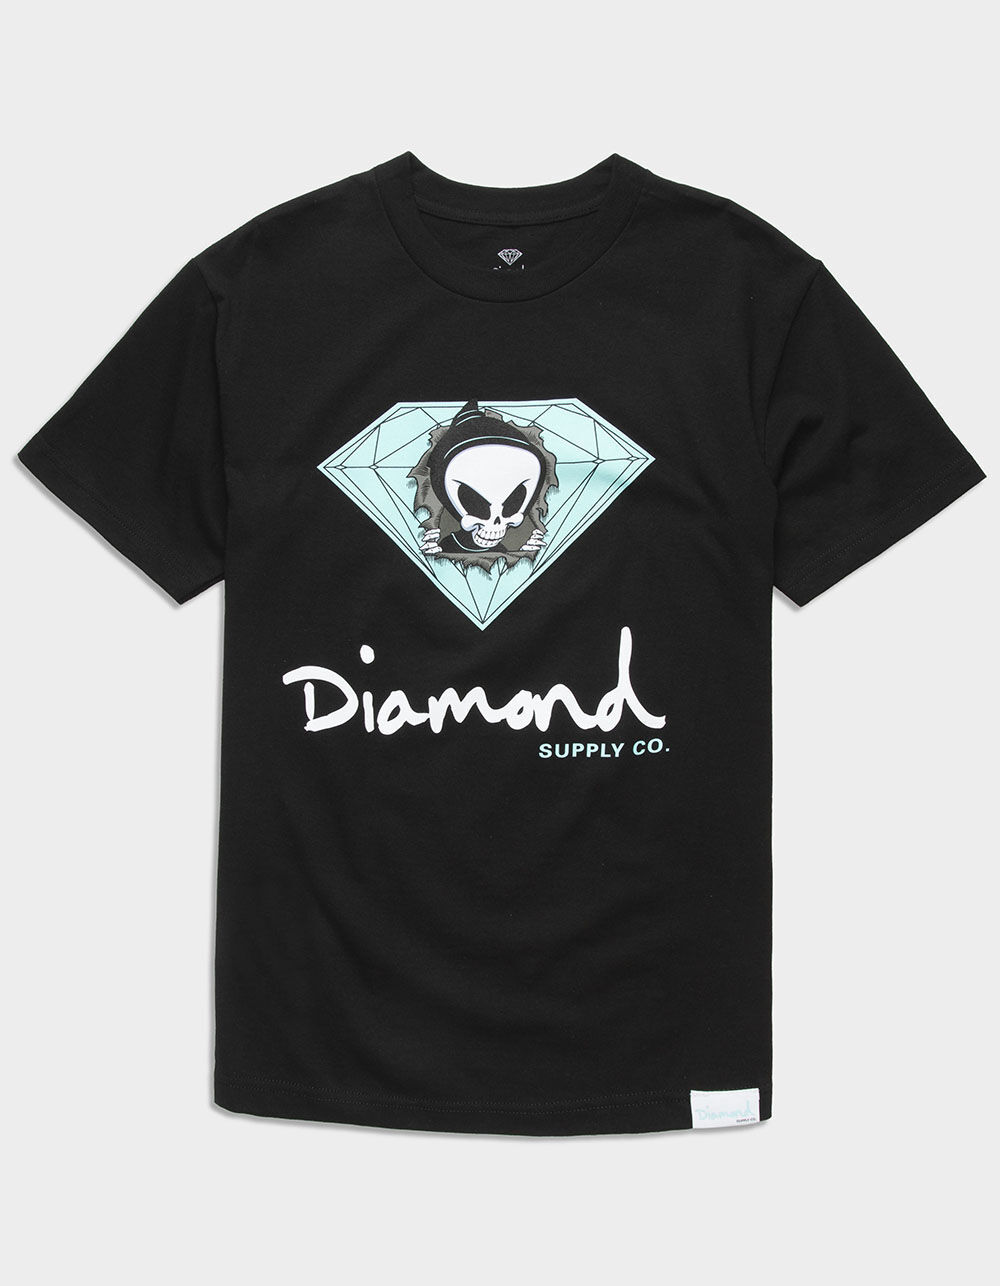 DIAMOND SUPPLY CO. x Blind Reaper Sign Mens Tee - BLACK | Tillys